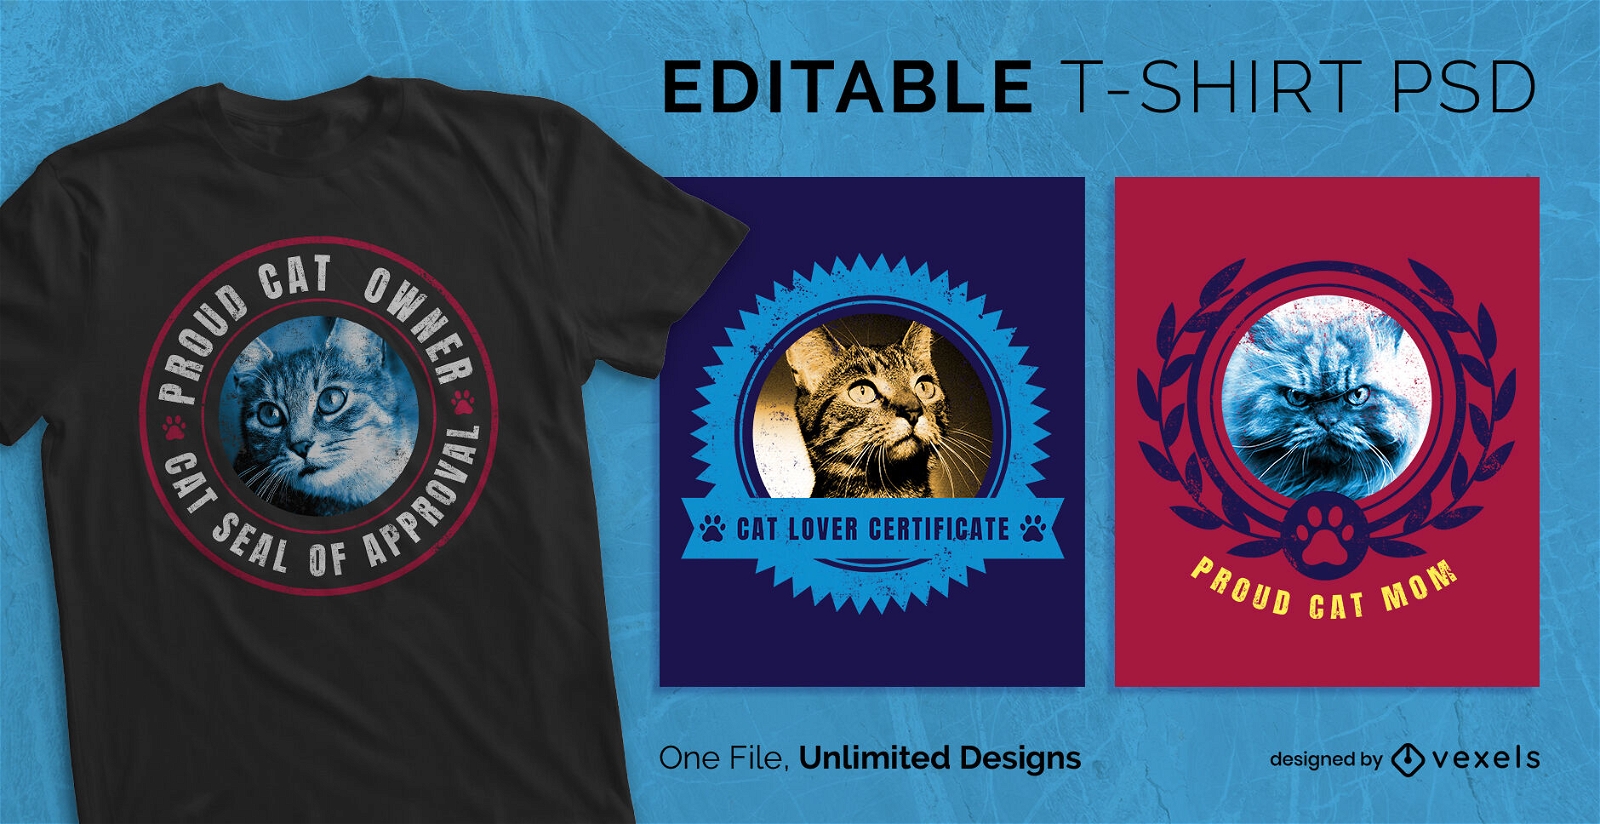 Cat badges scalable t-shirt PSD